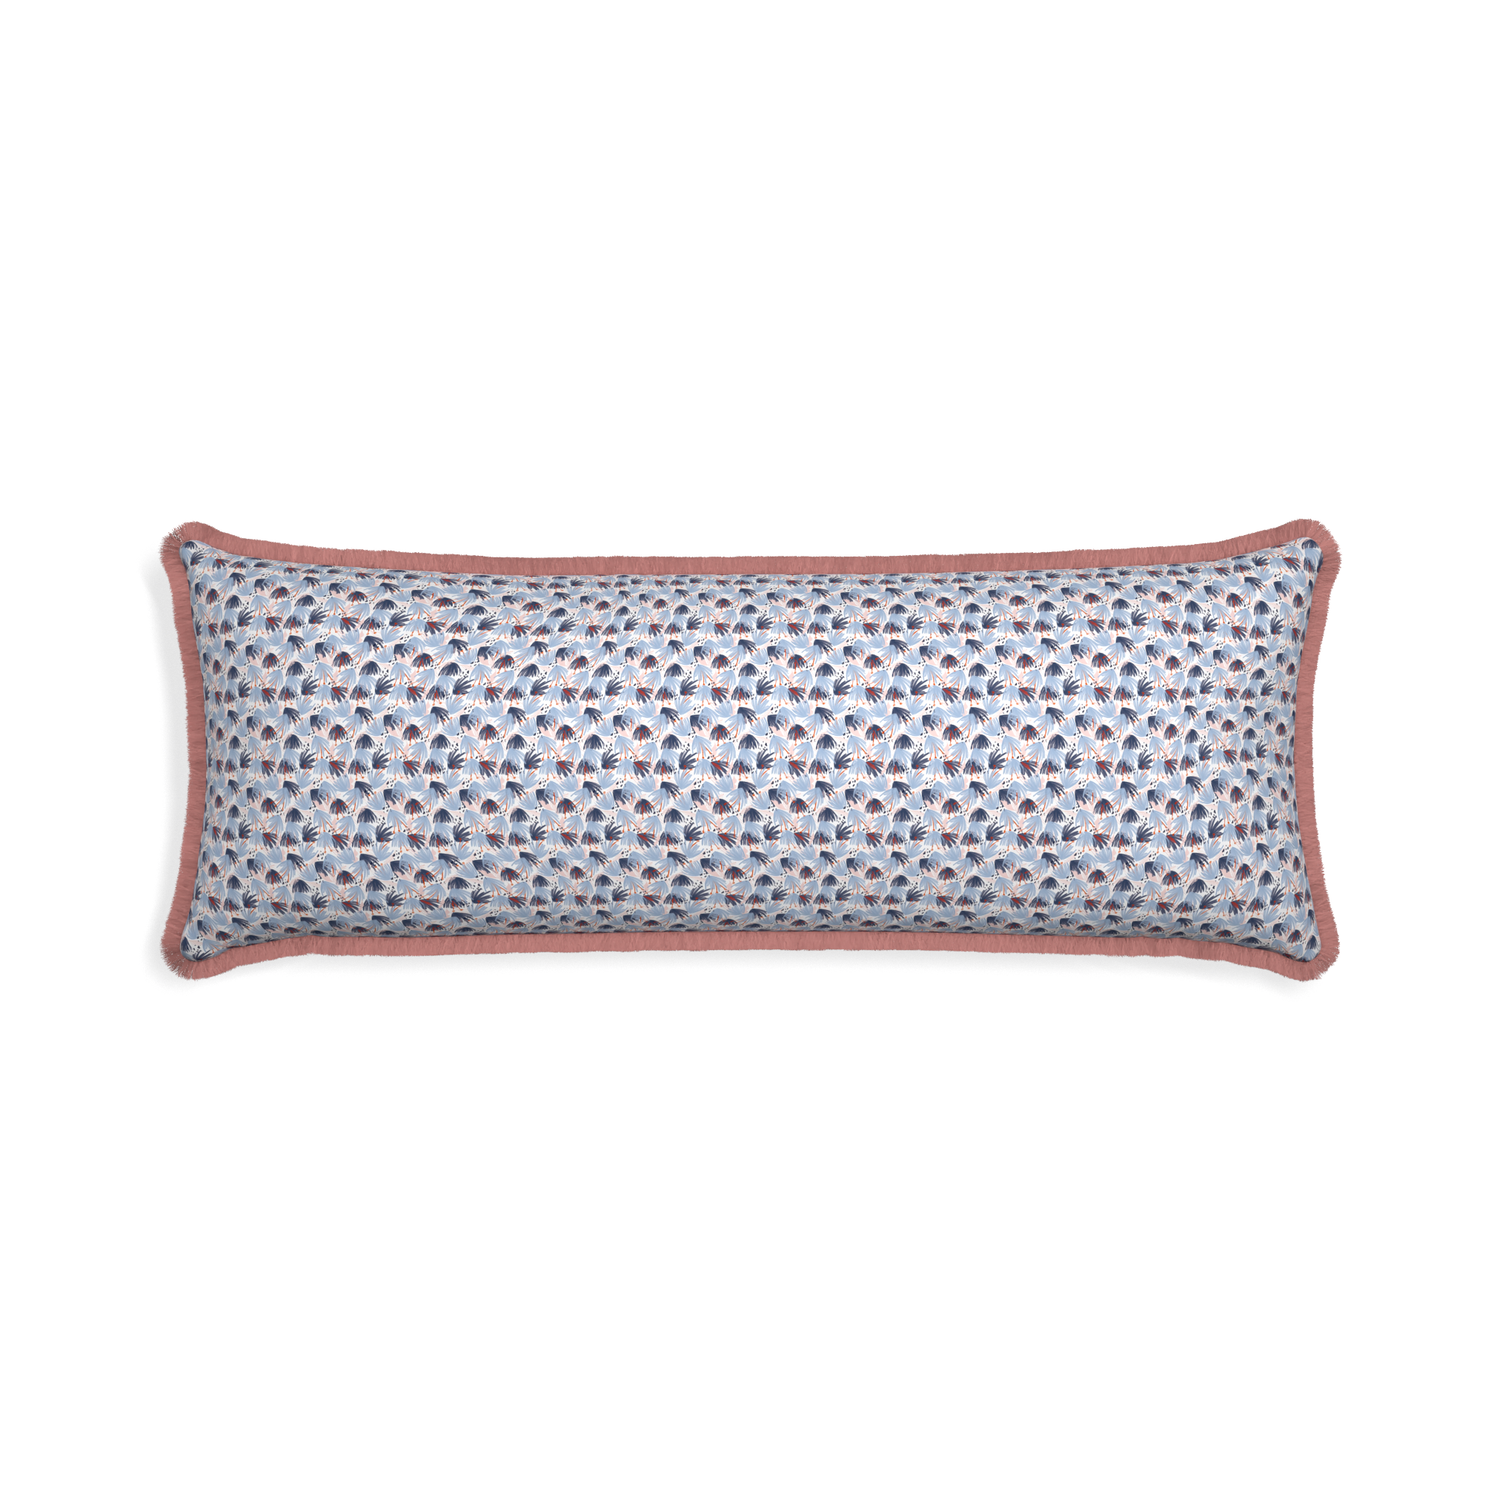 Xl-lumbar eden blue custom pillow with d fringe on white background